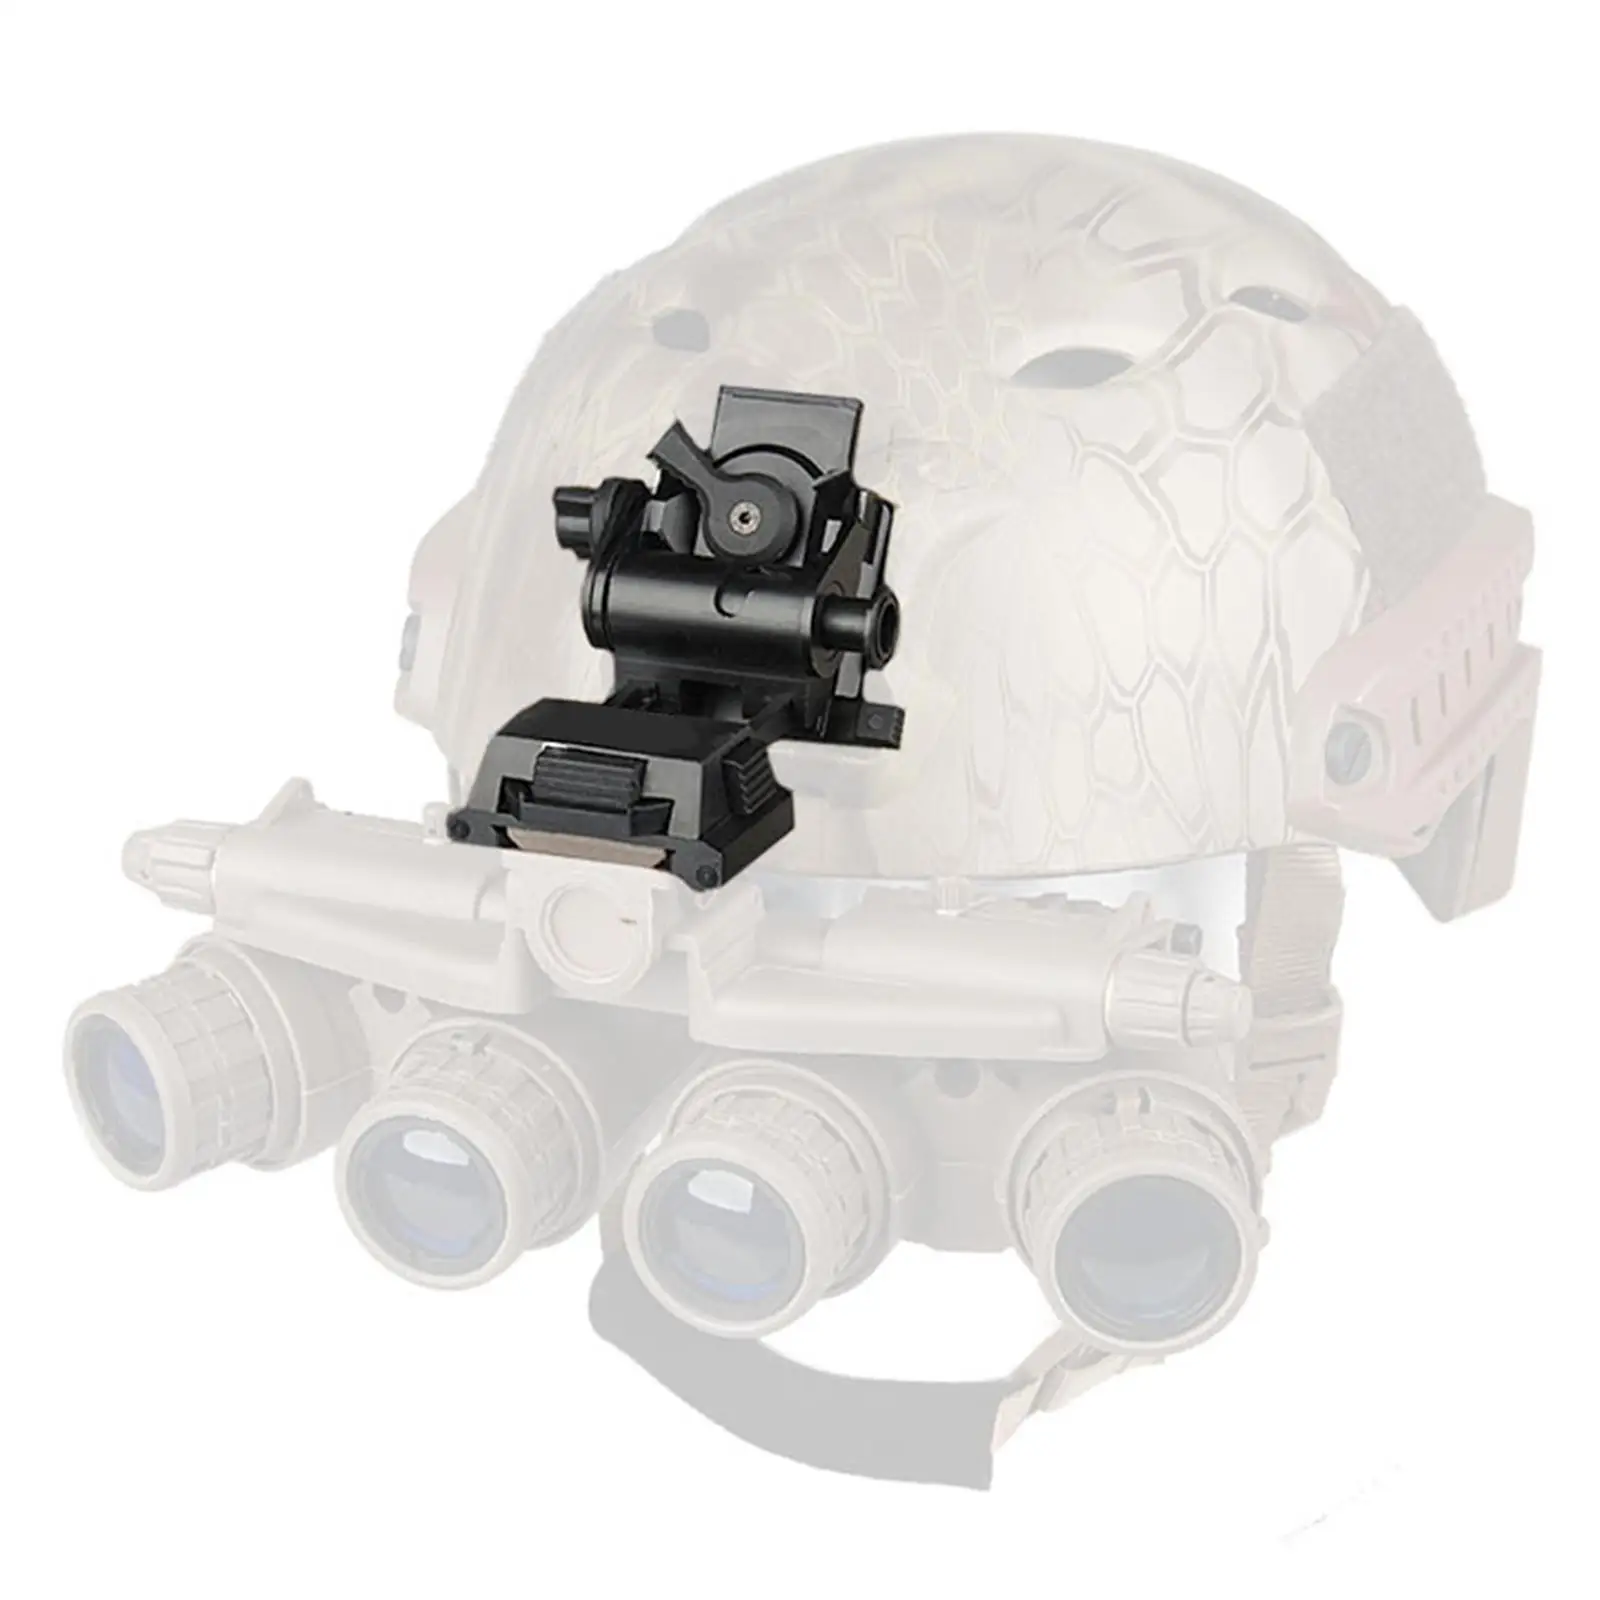 Holder Adjustable Night View Professional for Helmet Hunting